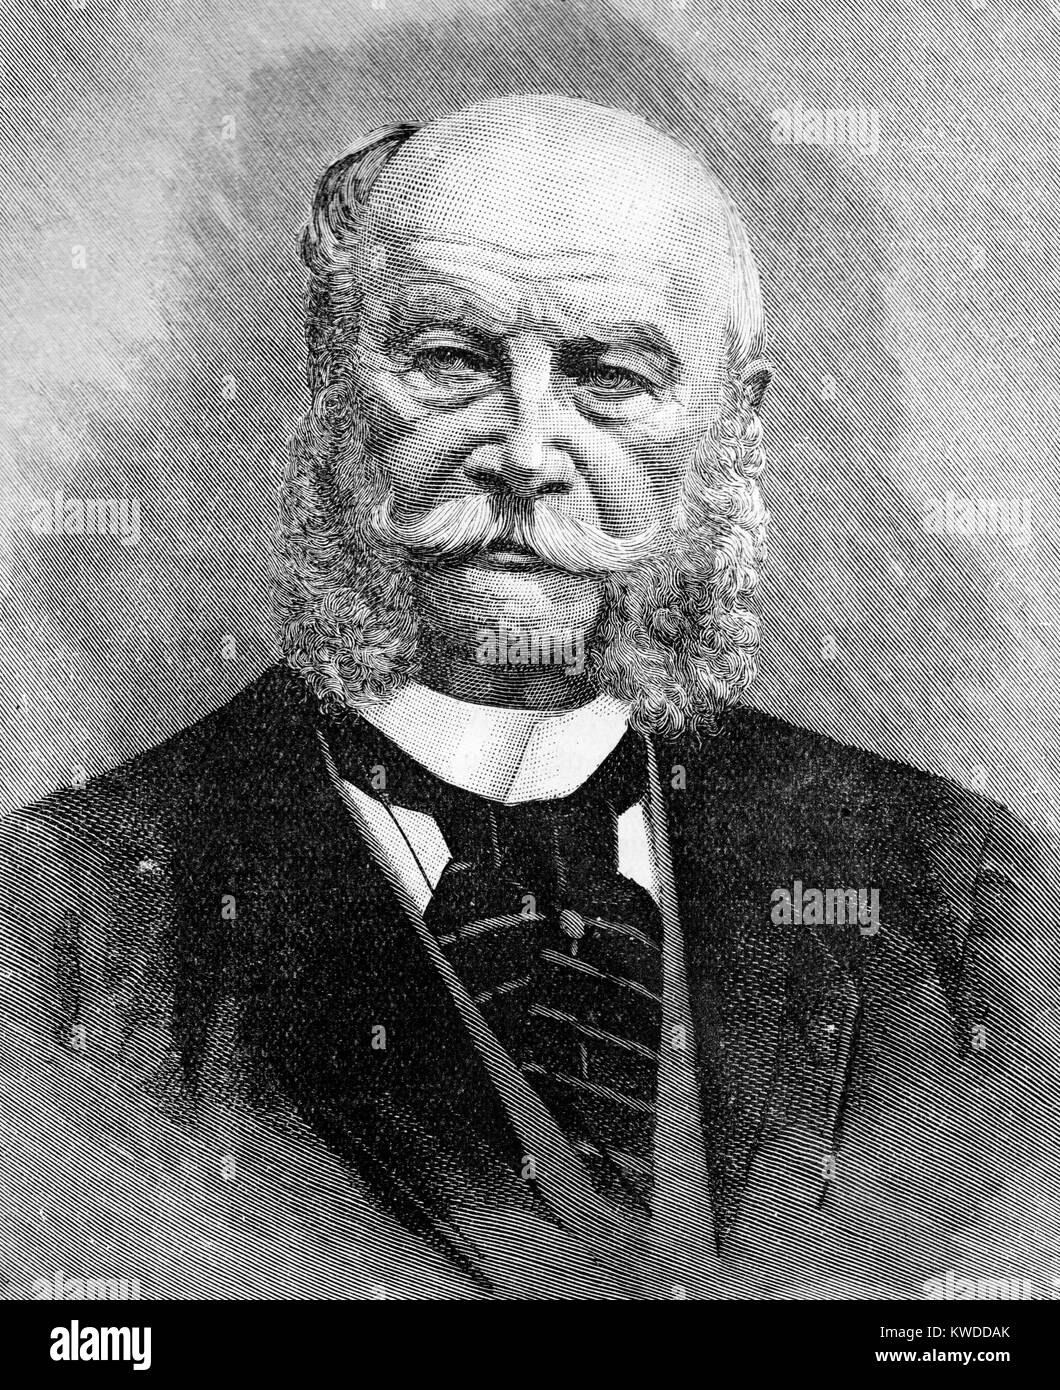 Portrait of Wilhelm Friedrich Ludwig von Hohenzollern (1797-1888), Wilhelm I, Emperor of Germany 1871-1888 Stock Photo